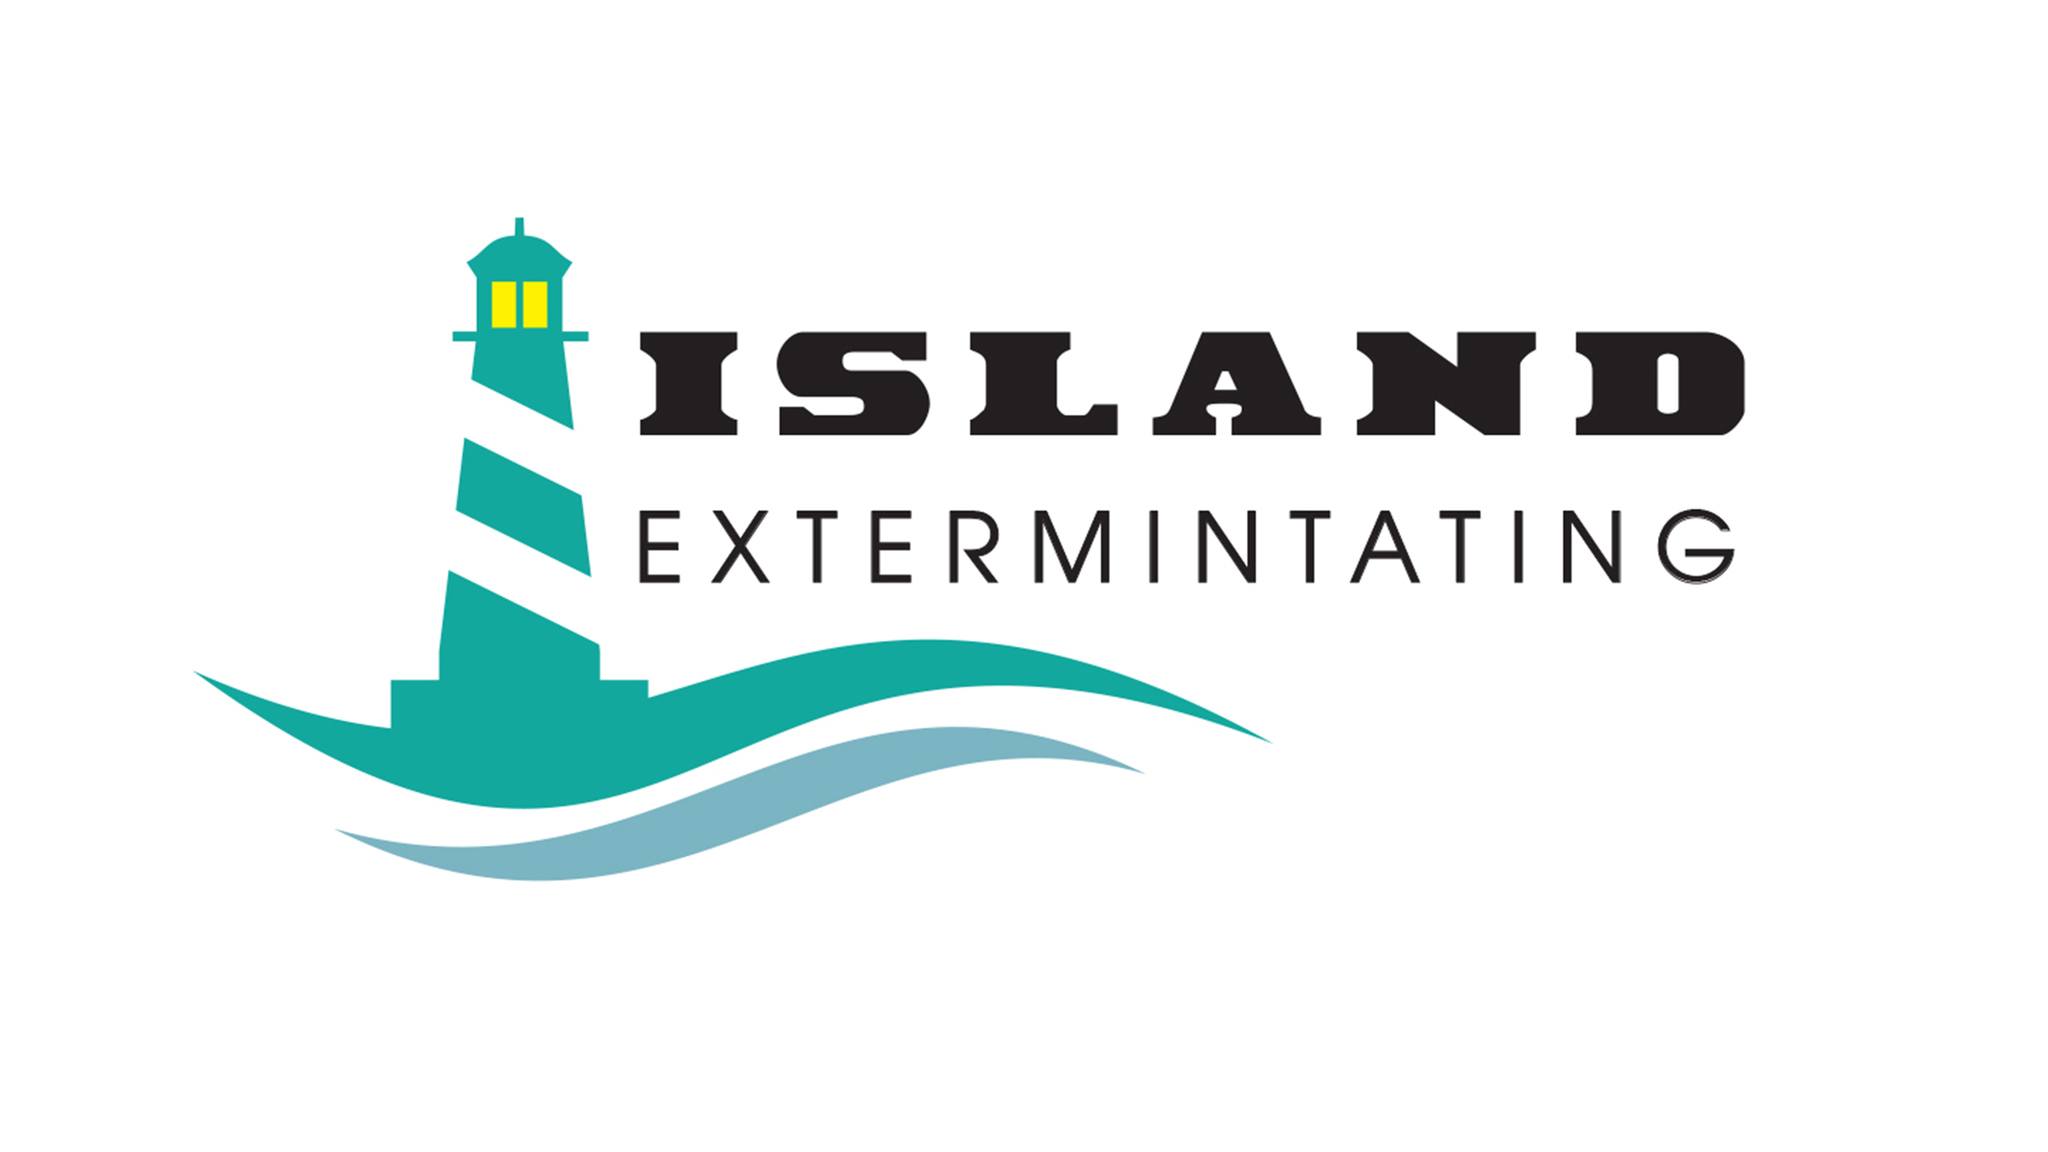 Island Exterminating Inc. 48 Main St, Westhampton Beach New York 11978